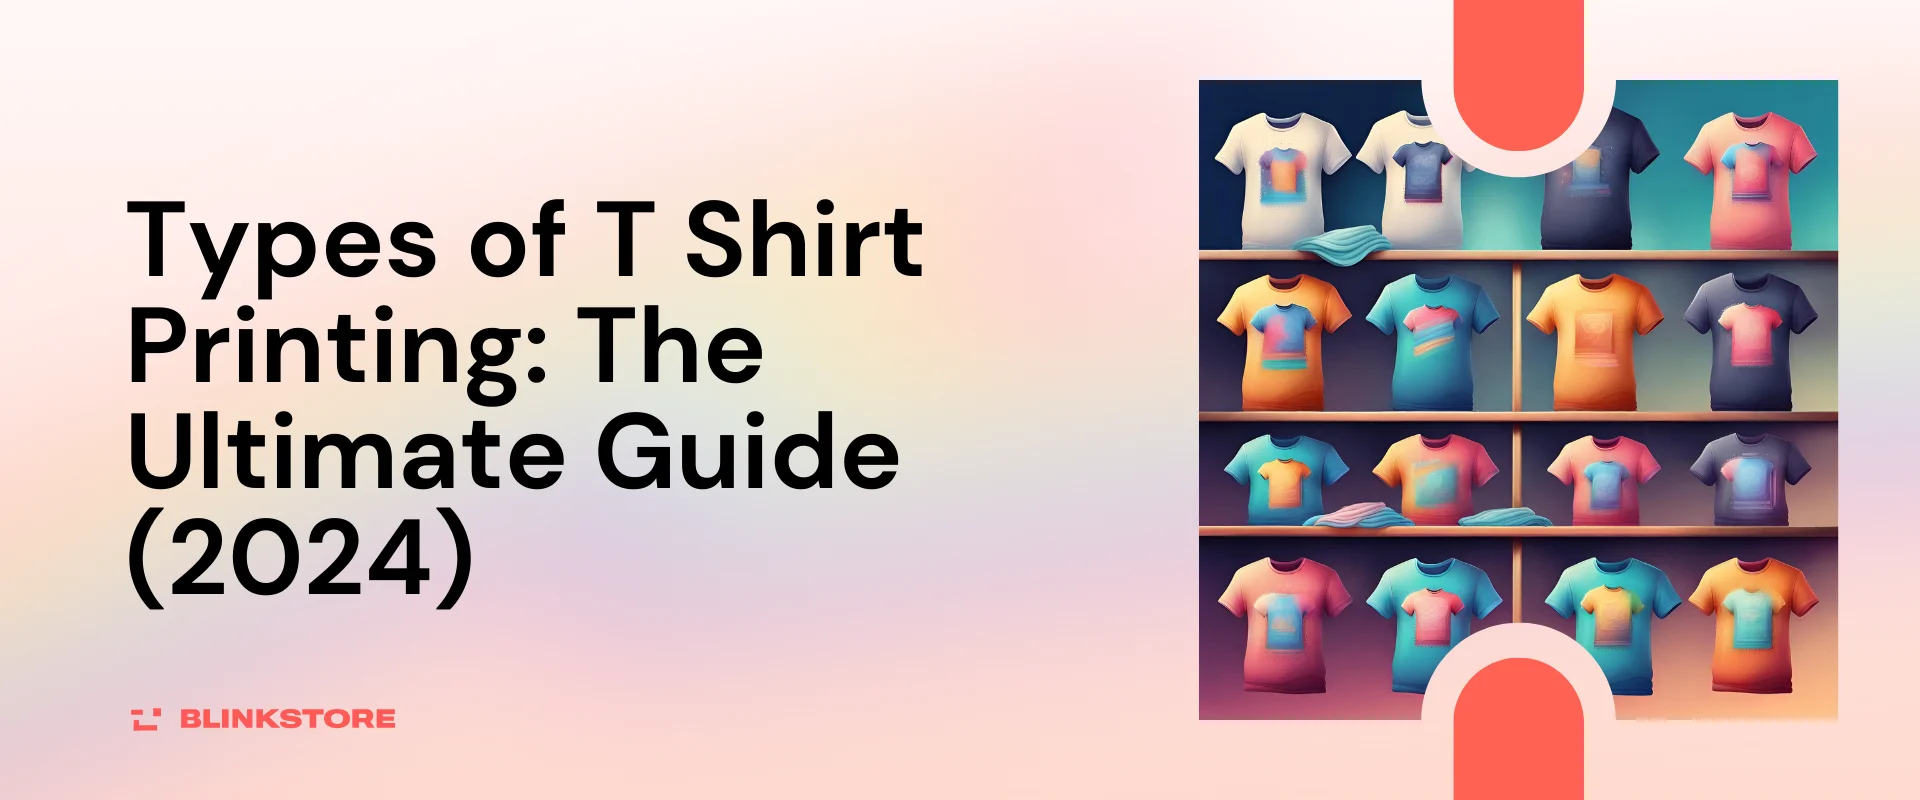 types of t shirt printing